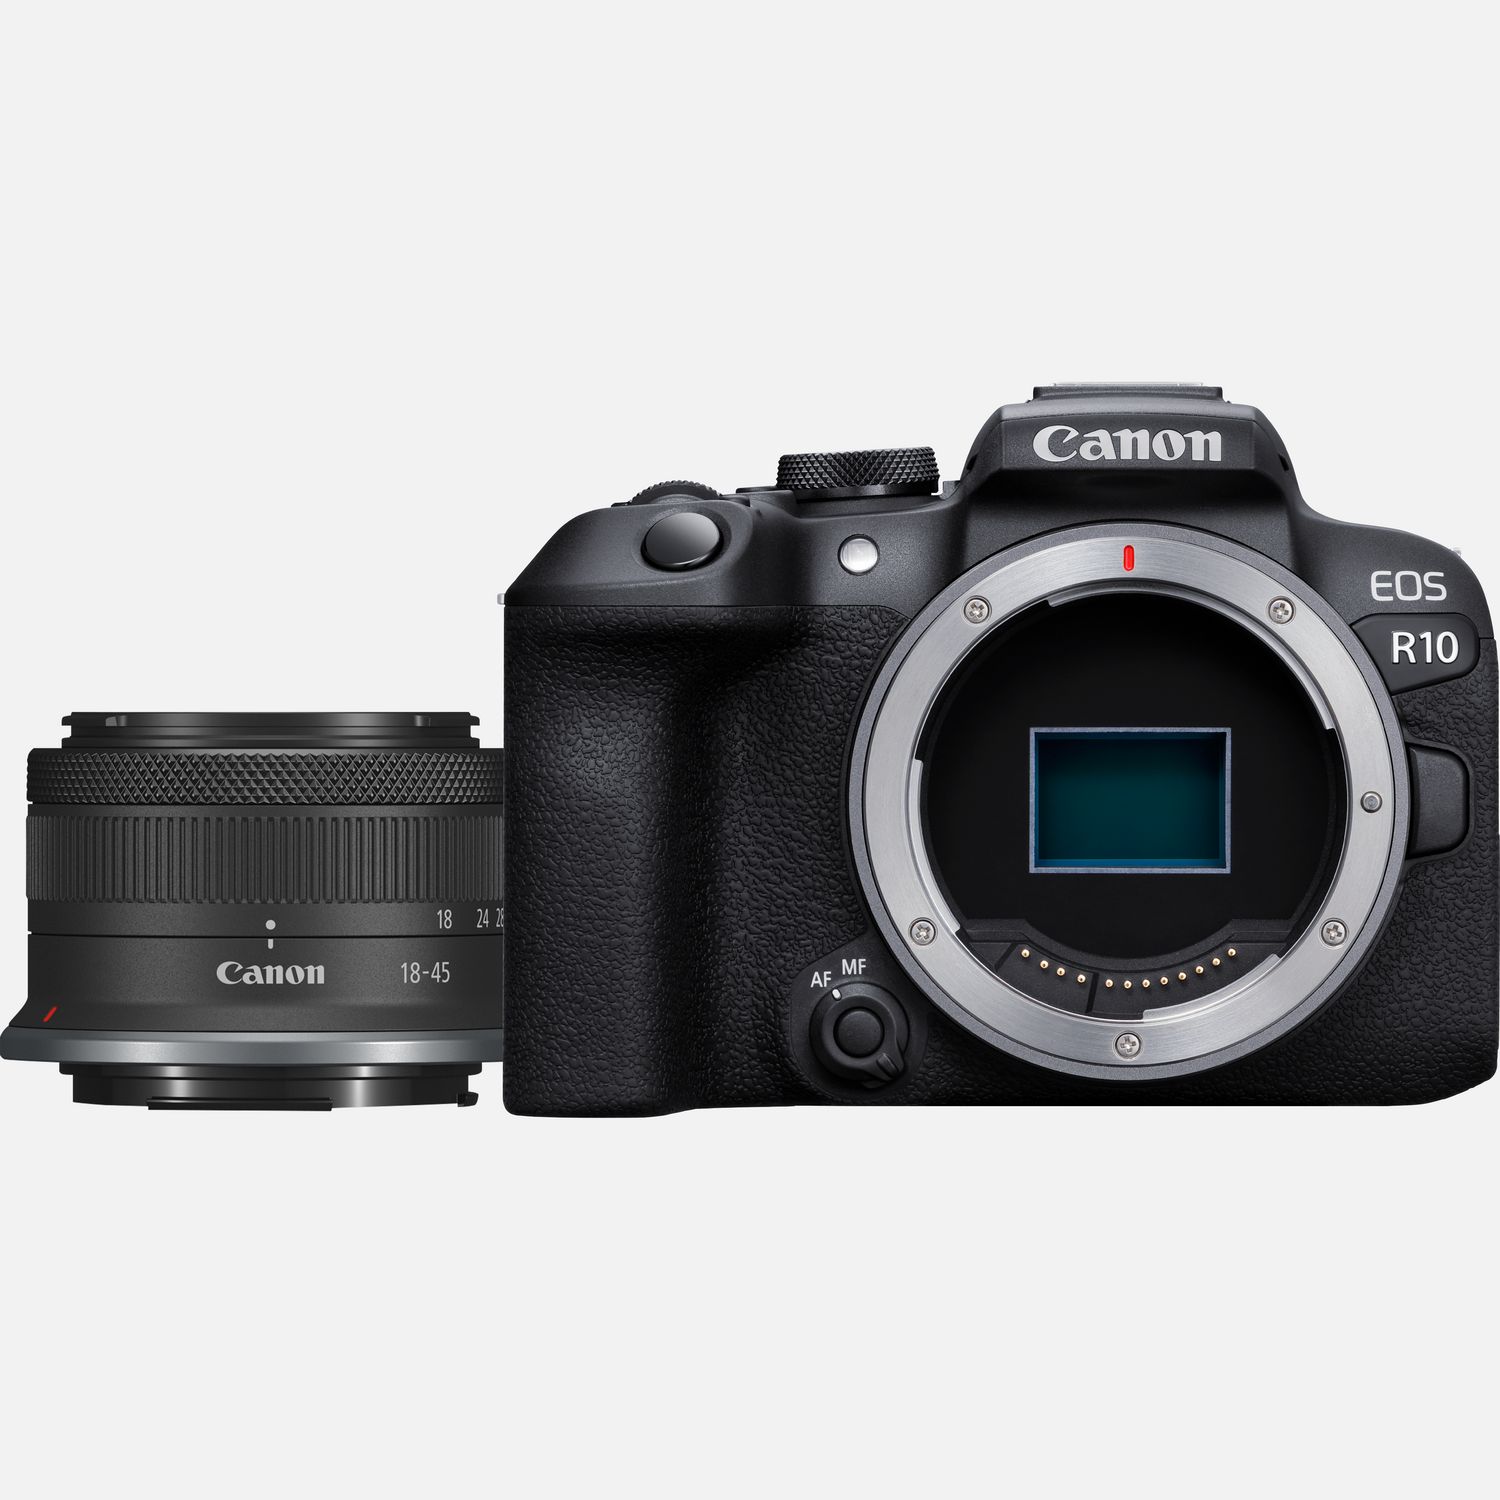 Appareils photo reflex et hybrides 4K - Canon France